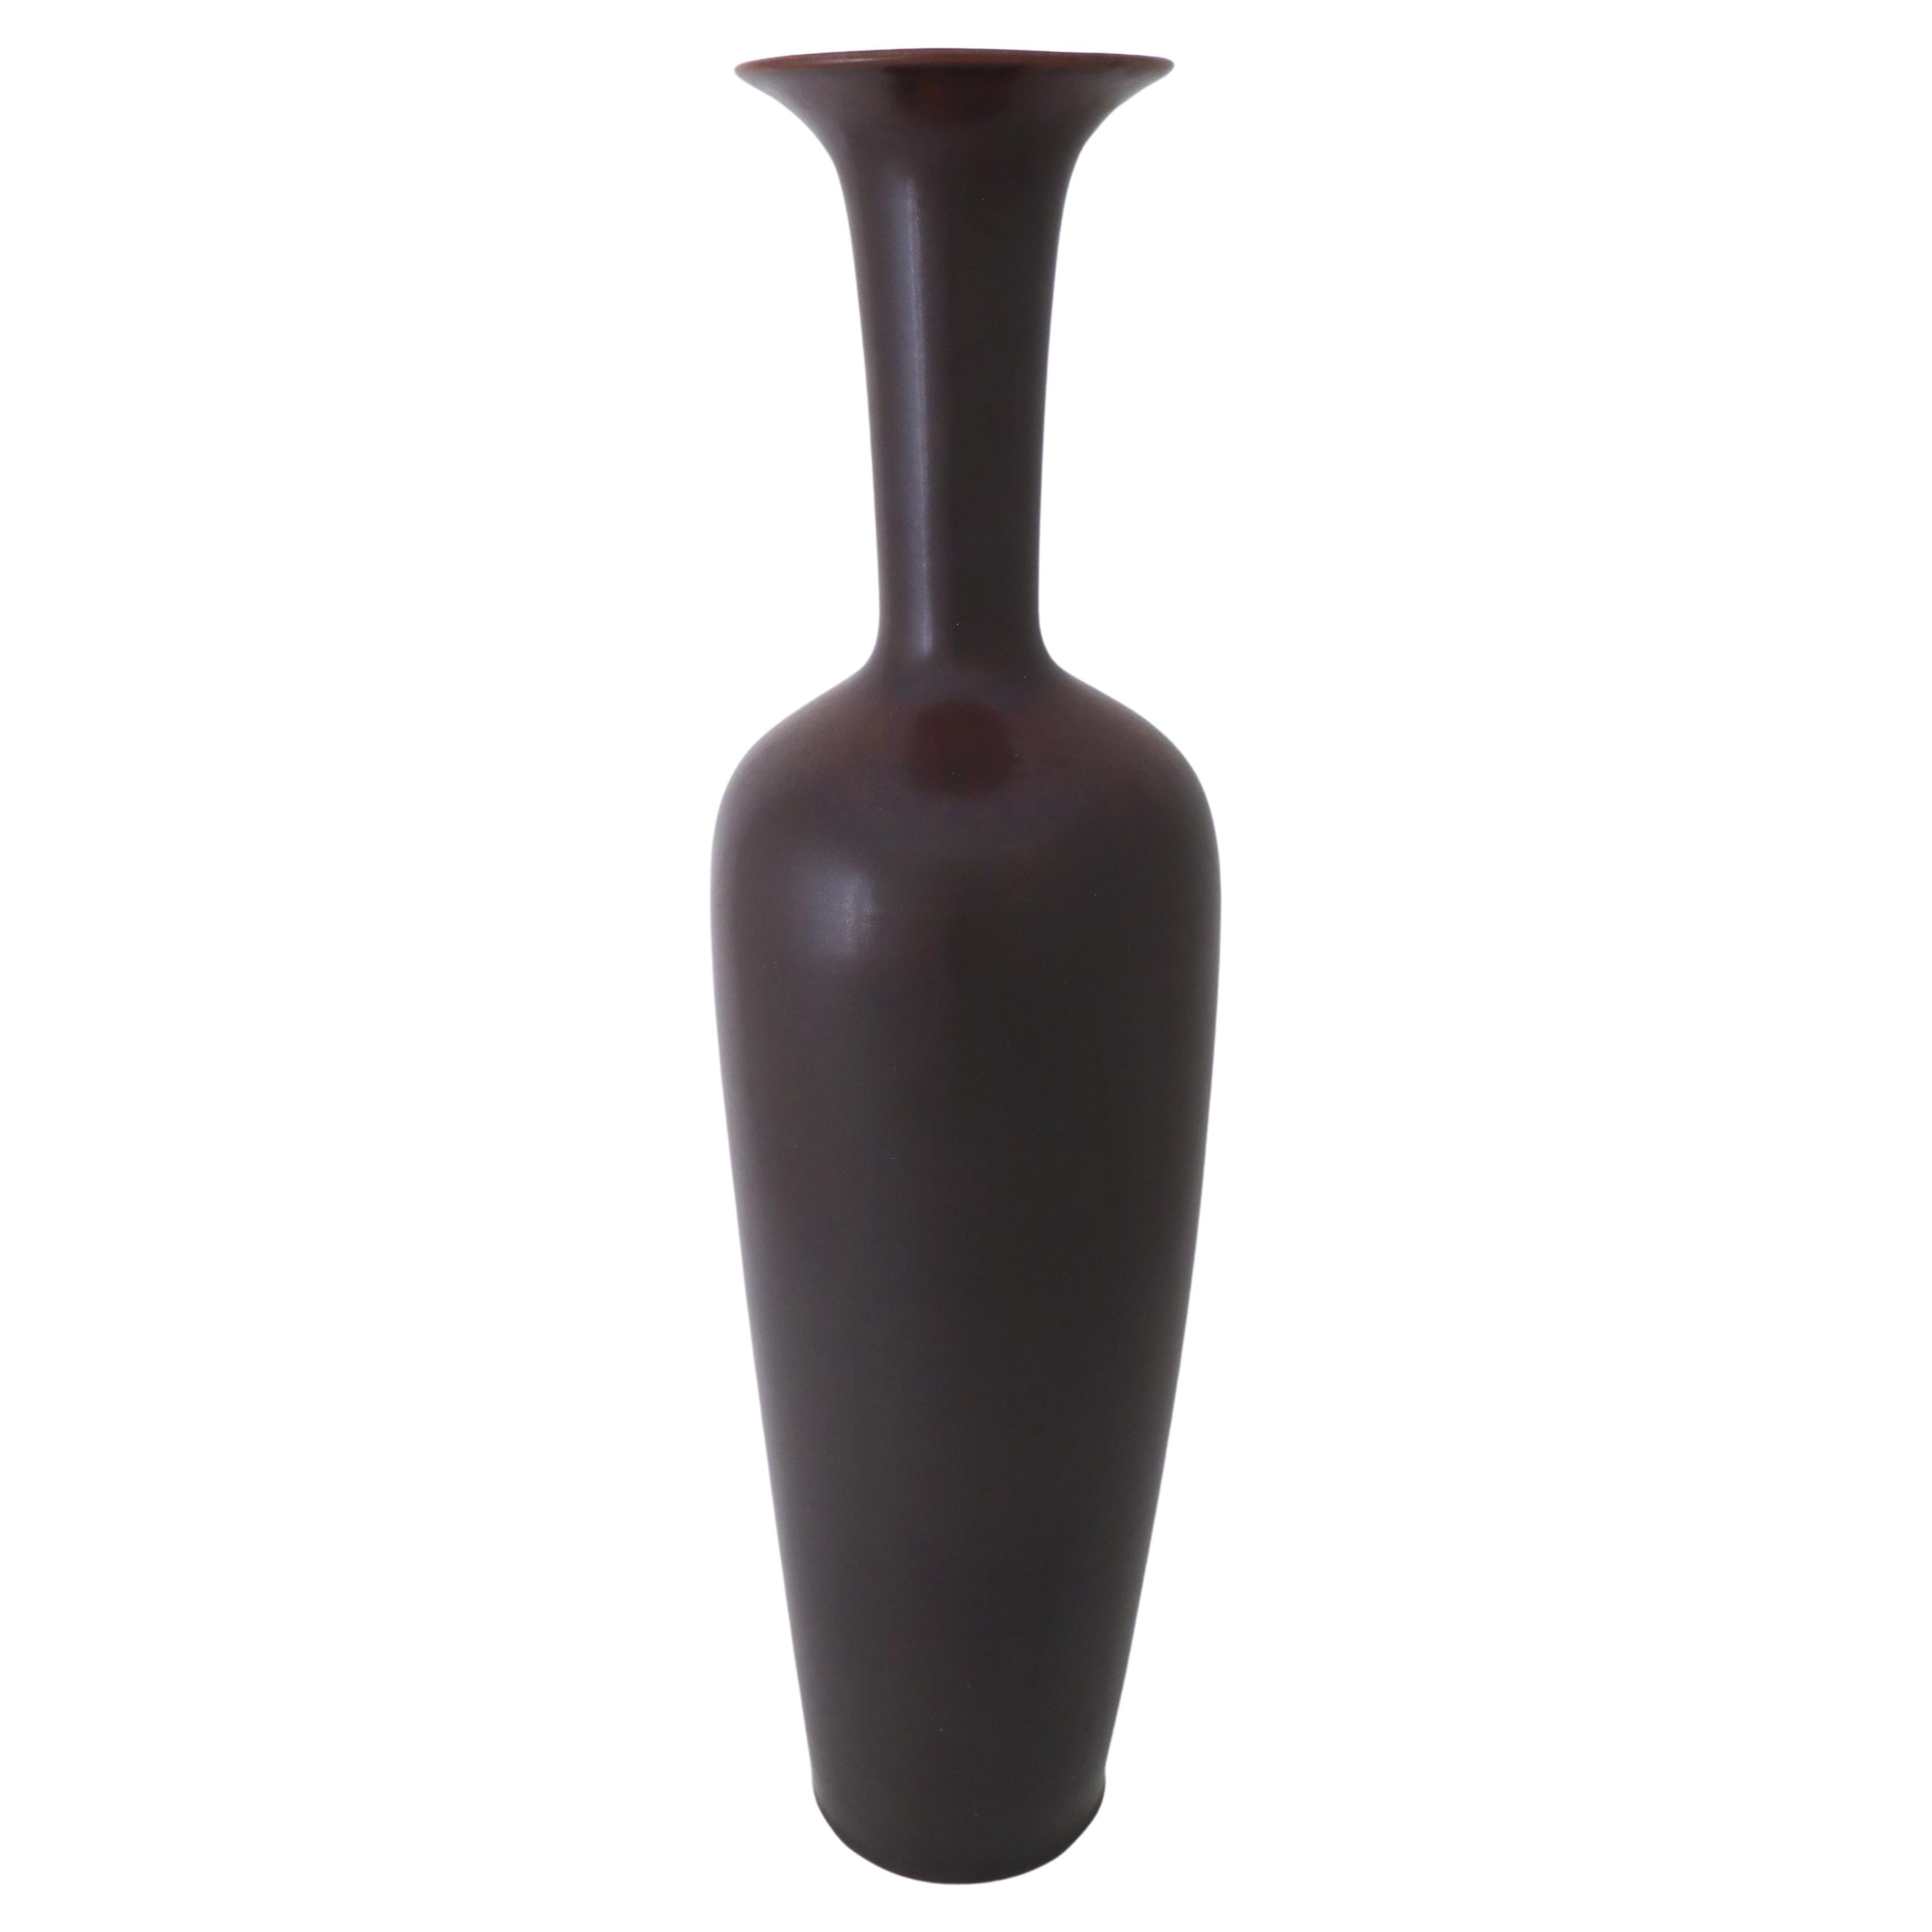 Grand vase de sol en céramique - Brown foncé - Gunnar Nylund - Rörstrand - 20e siècle